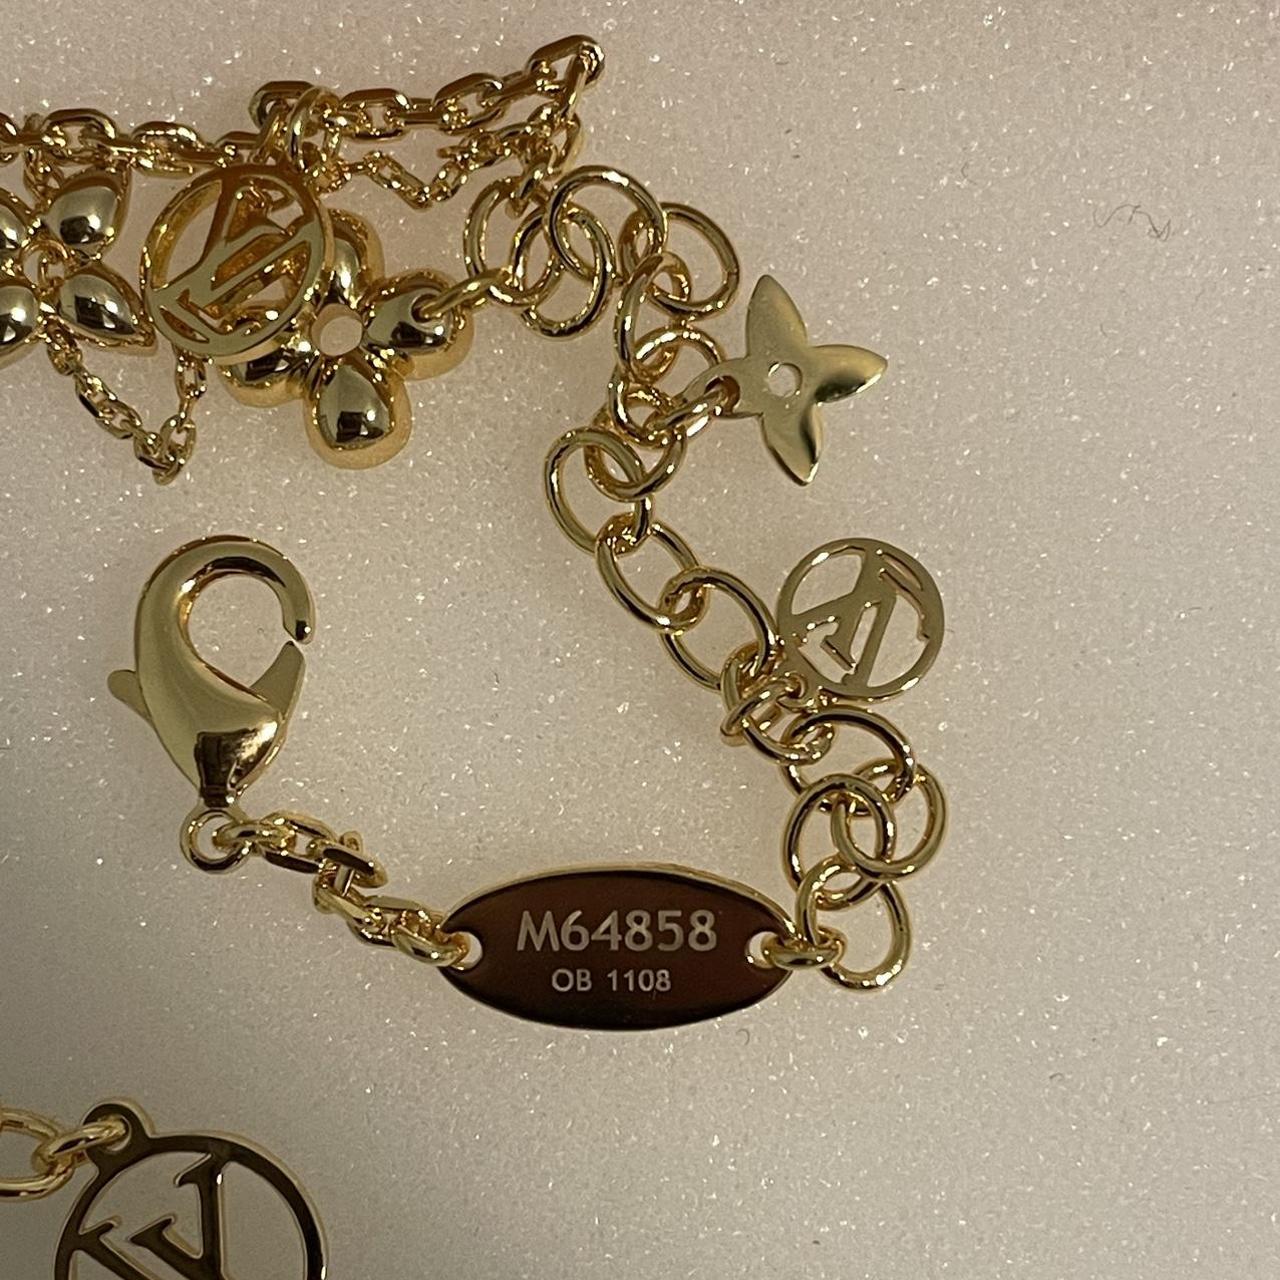 Shop Louis Vuitton Blooming supple bracelet by epimano